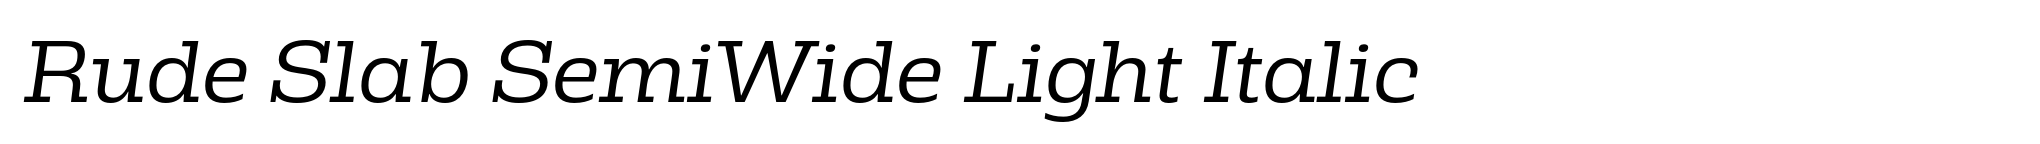 Rude Slab SemiWide Light Italic image